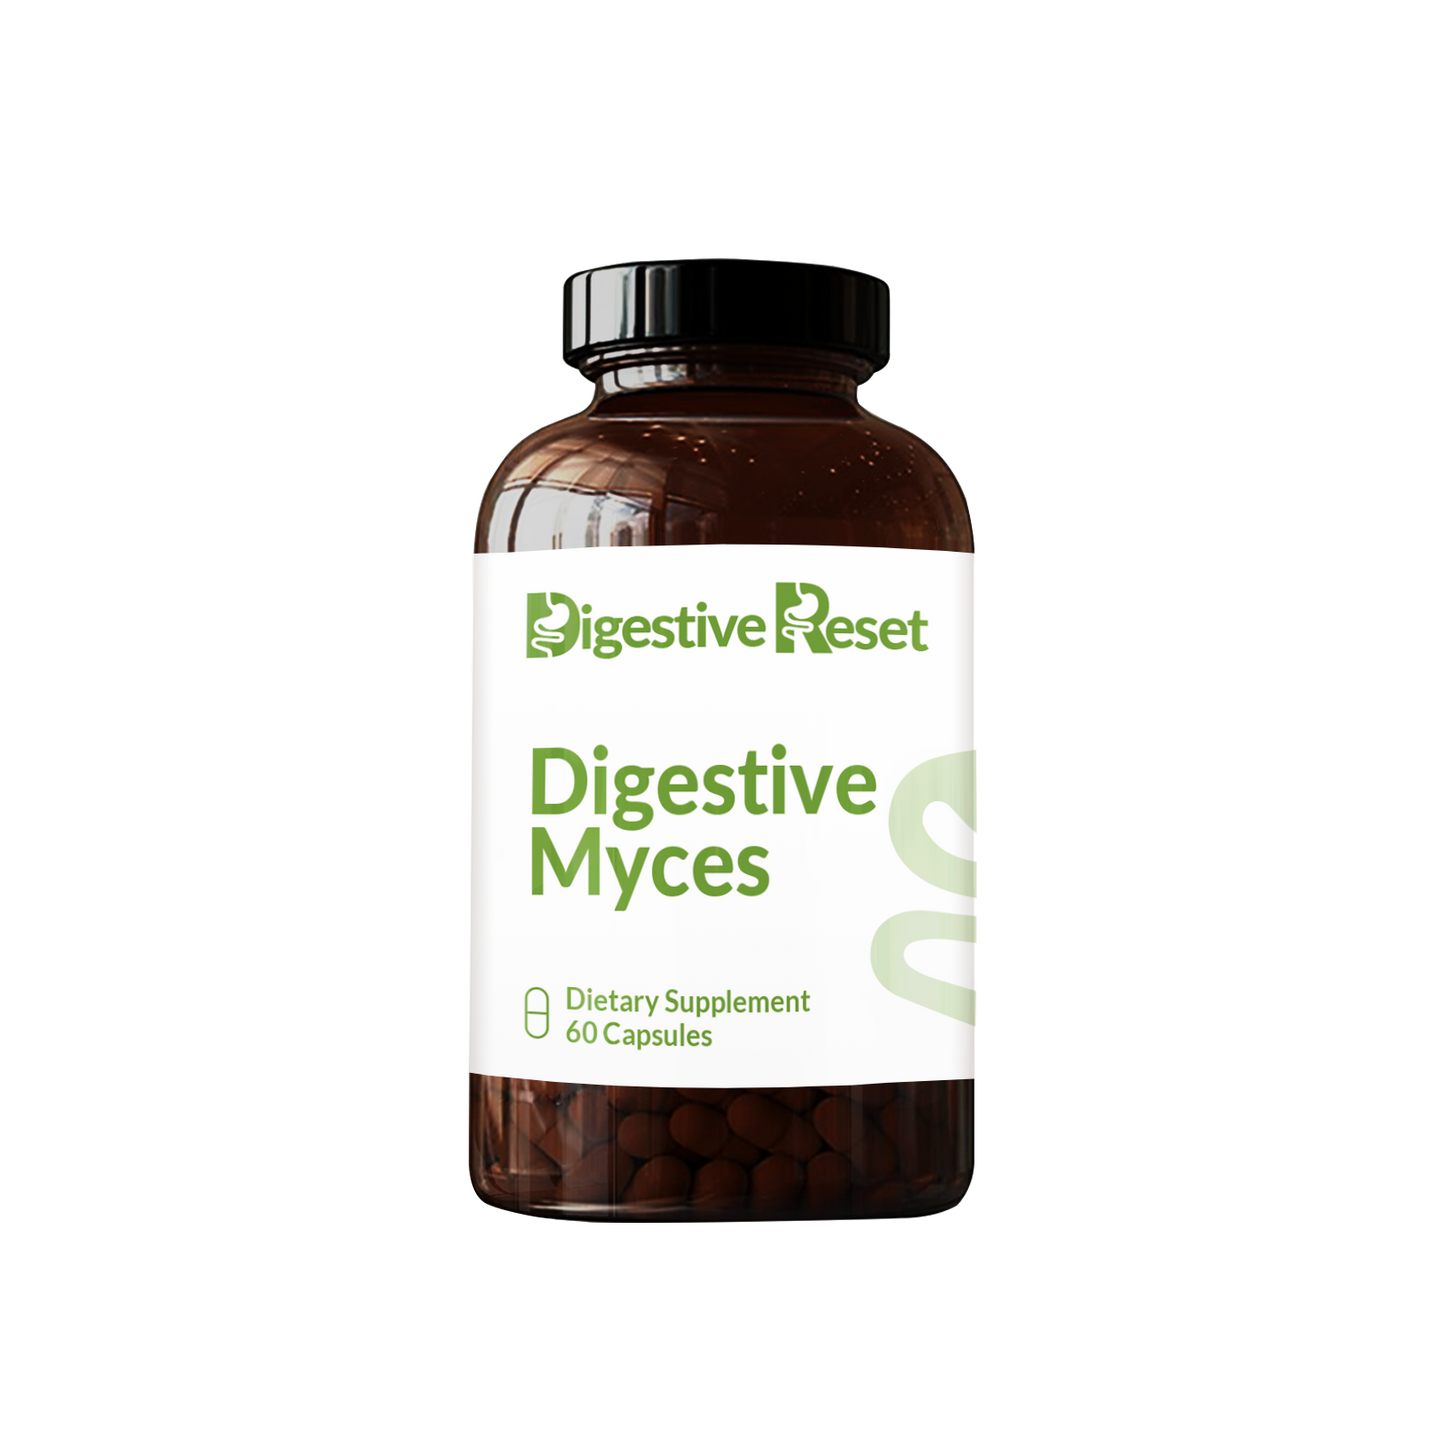 Digestive Myces